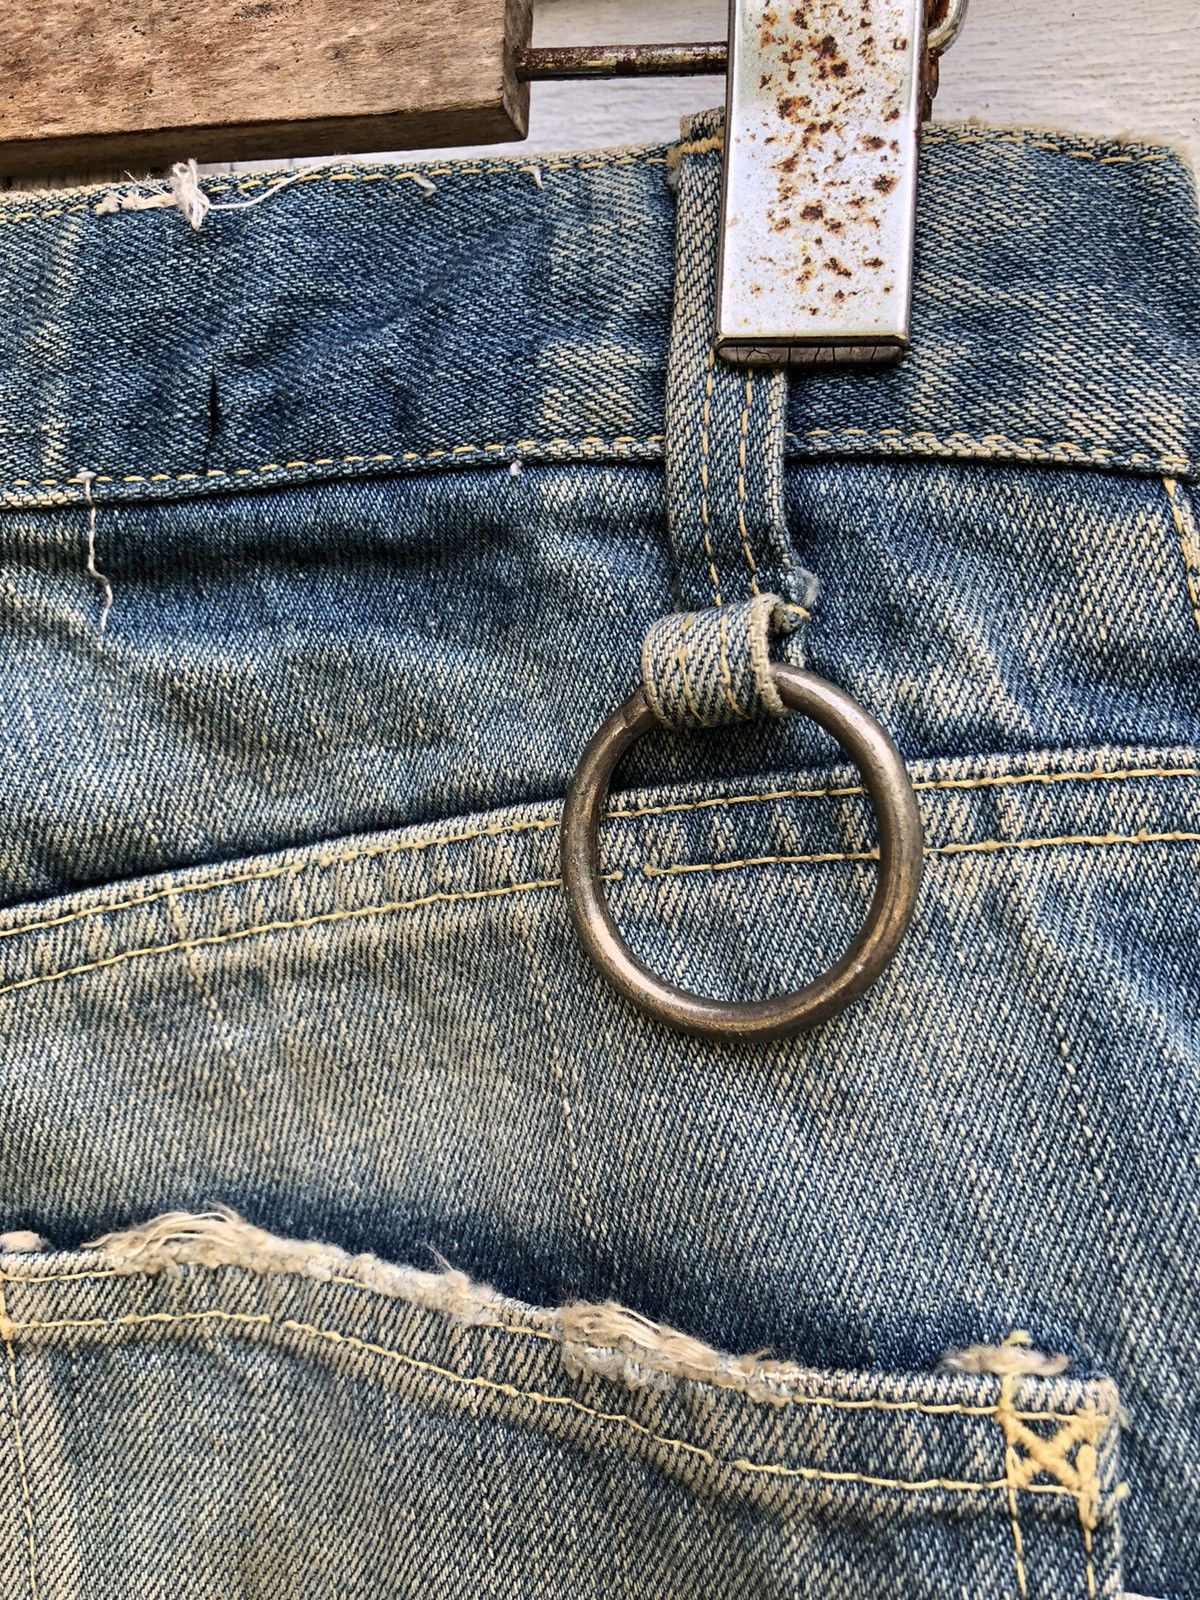 💯Felir💯Discovered Distressed Bush Pocket Pant Jean - 10